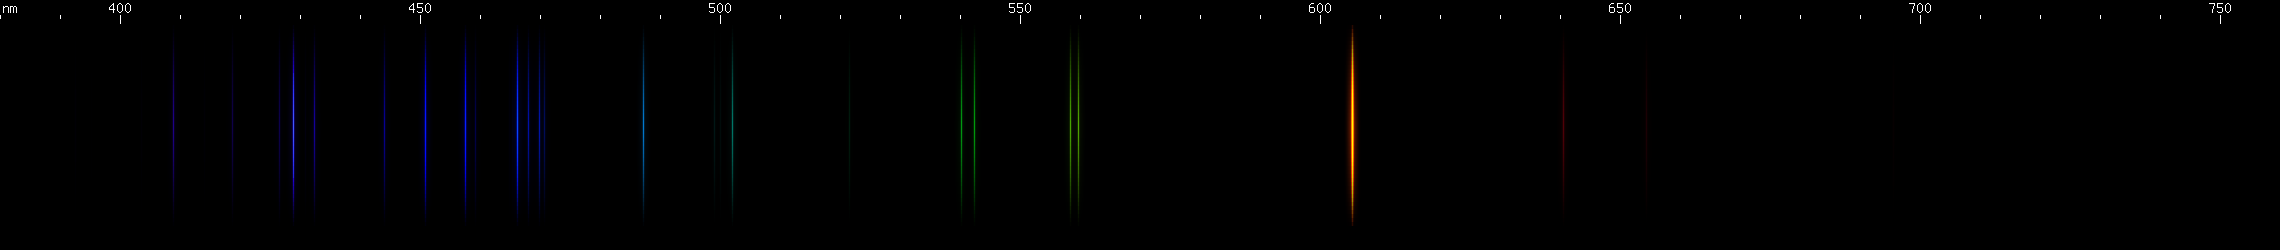 Spectral lines of Americium.